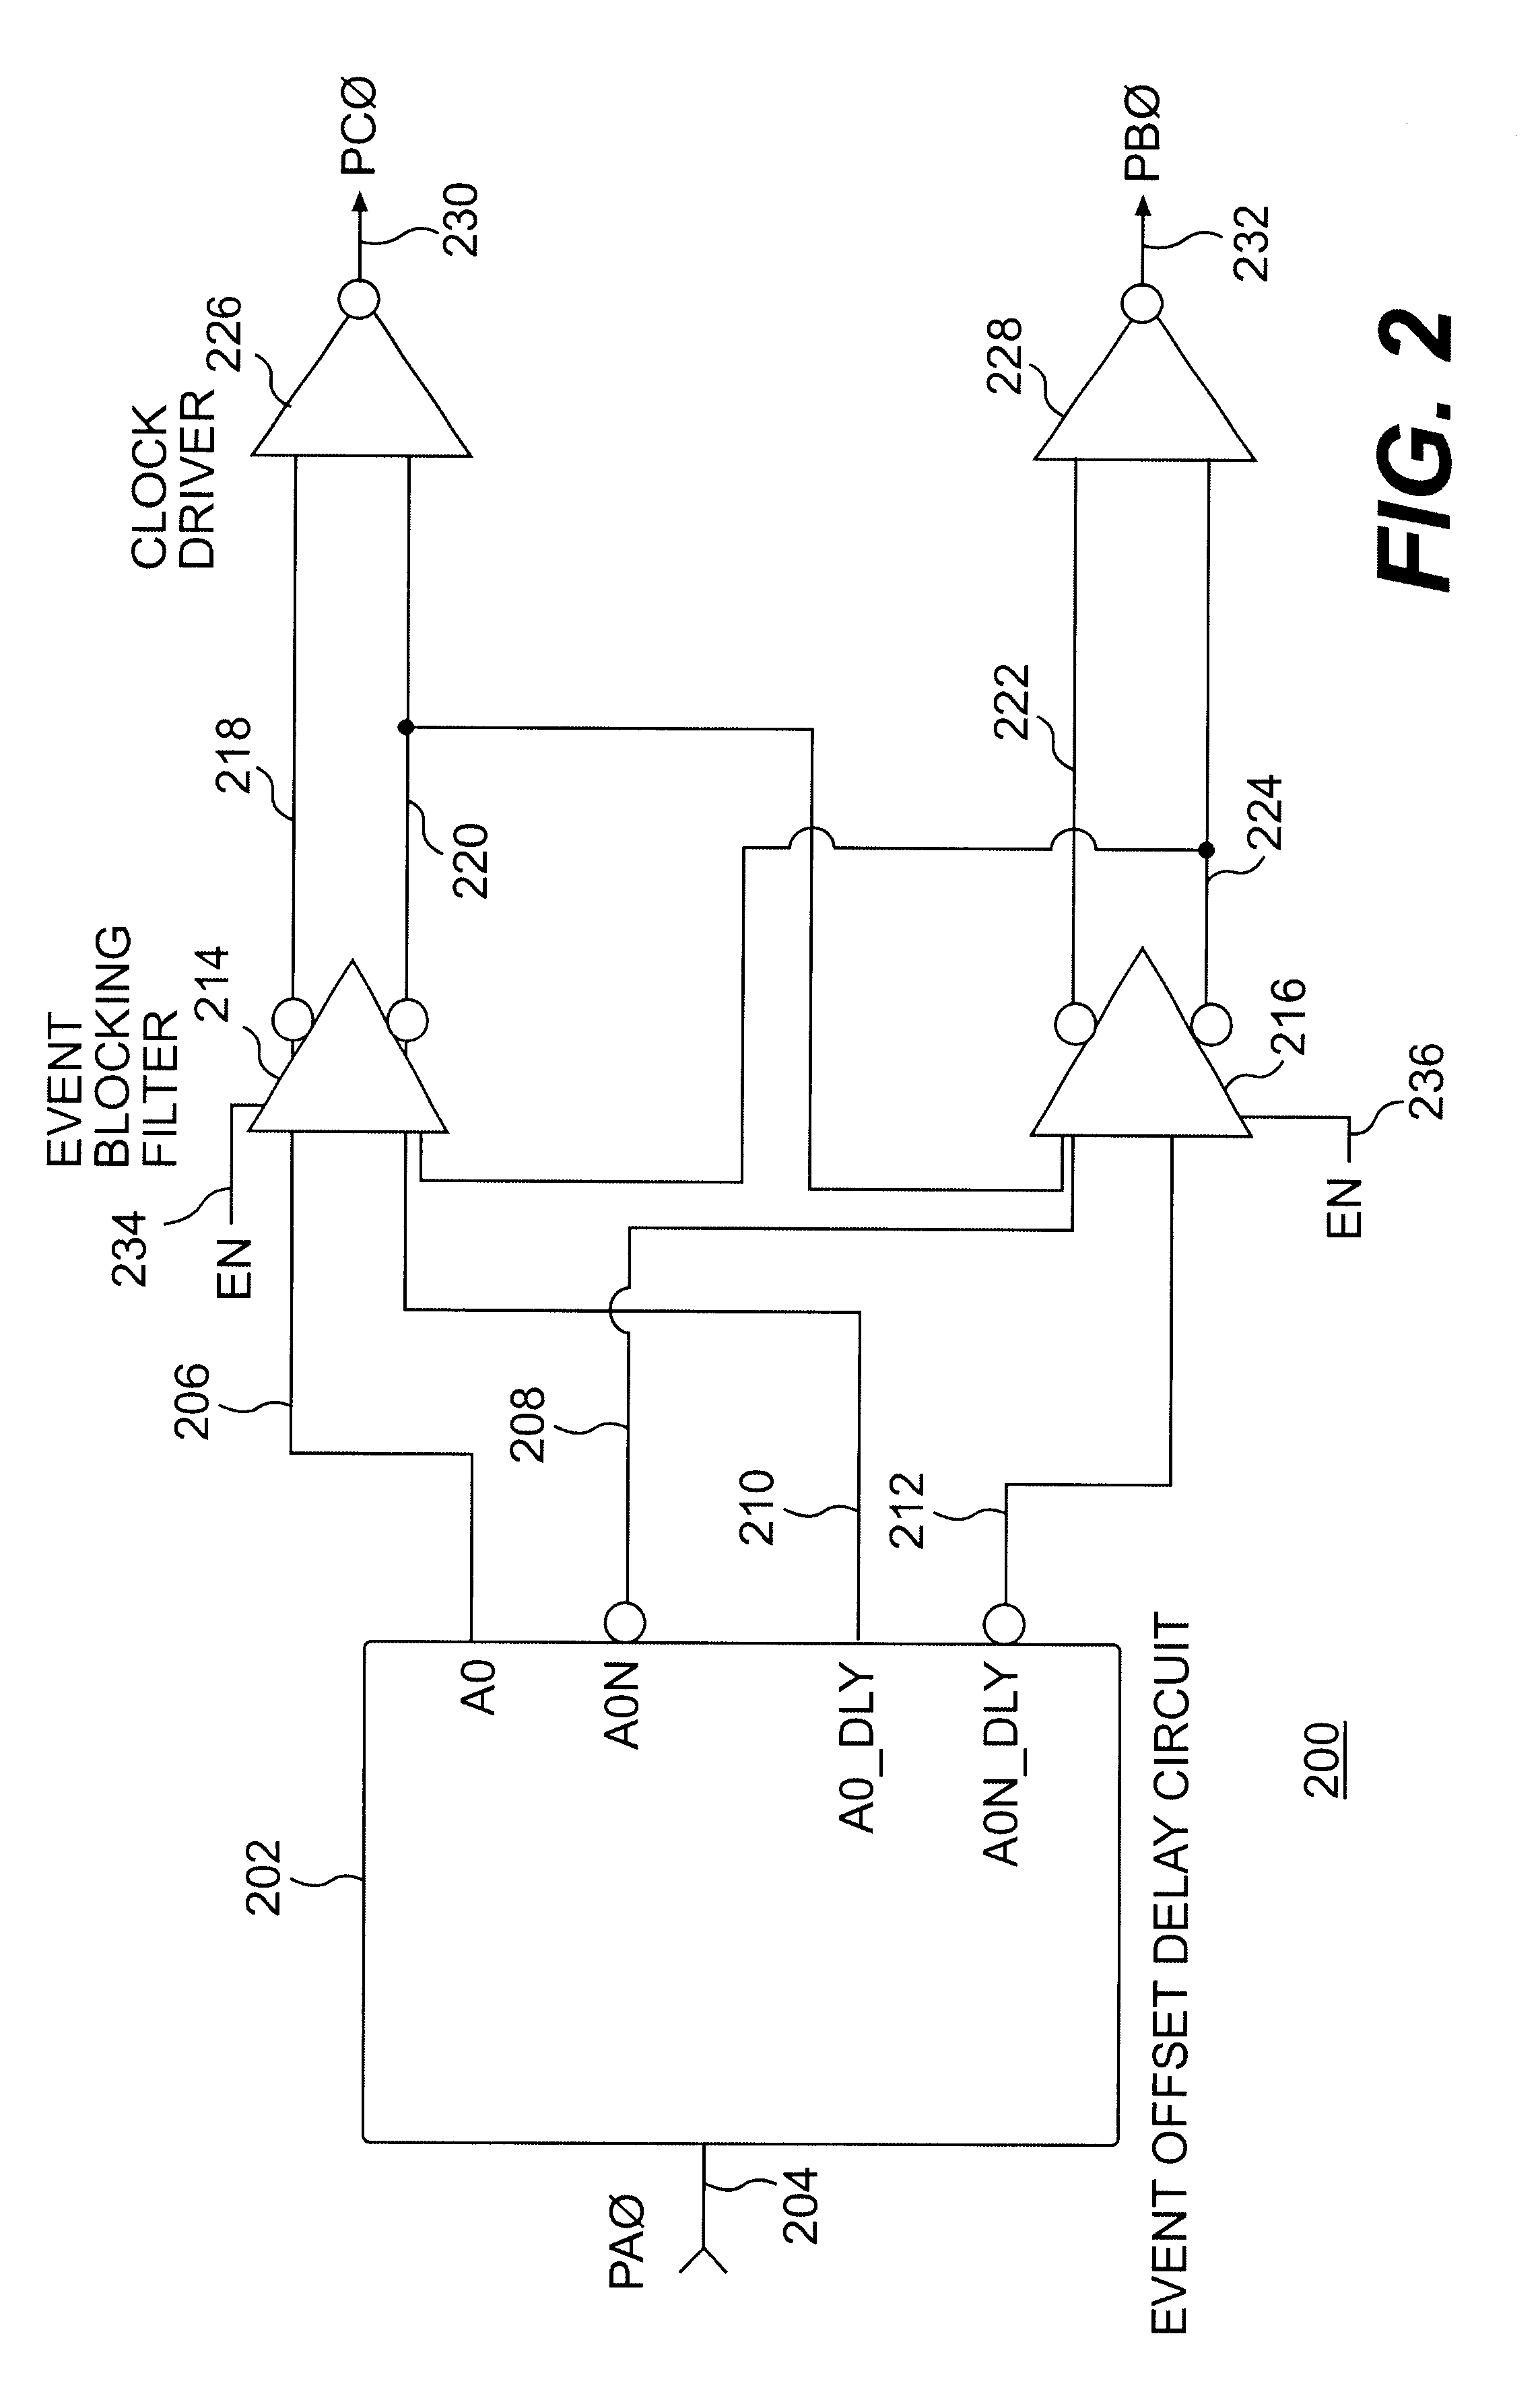 Method and apparatus for a single event upset (SEU) tolerant clock splitter